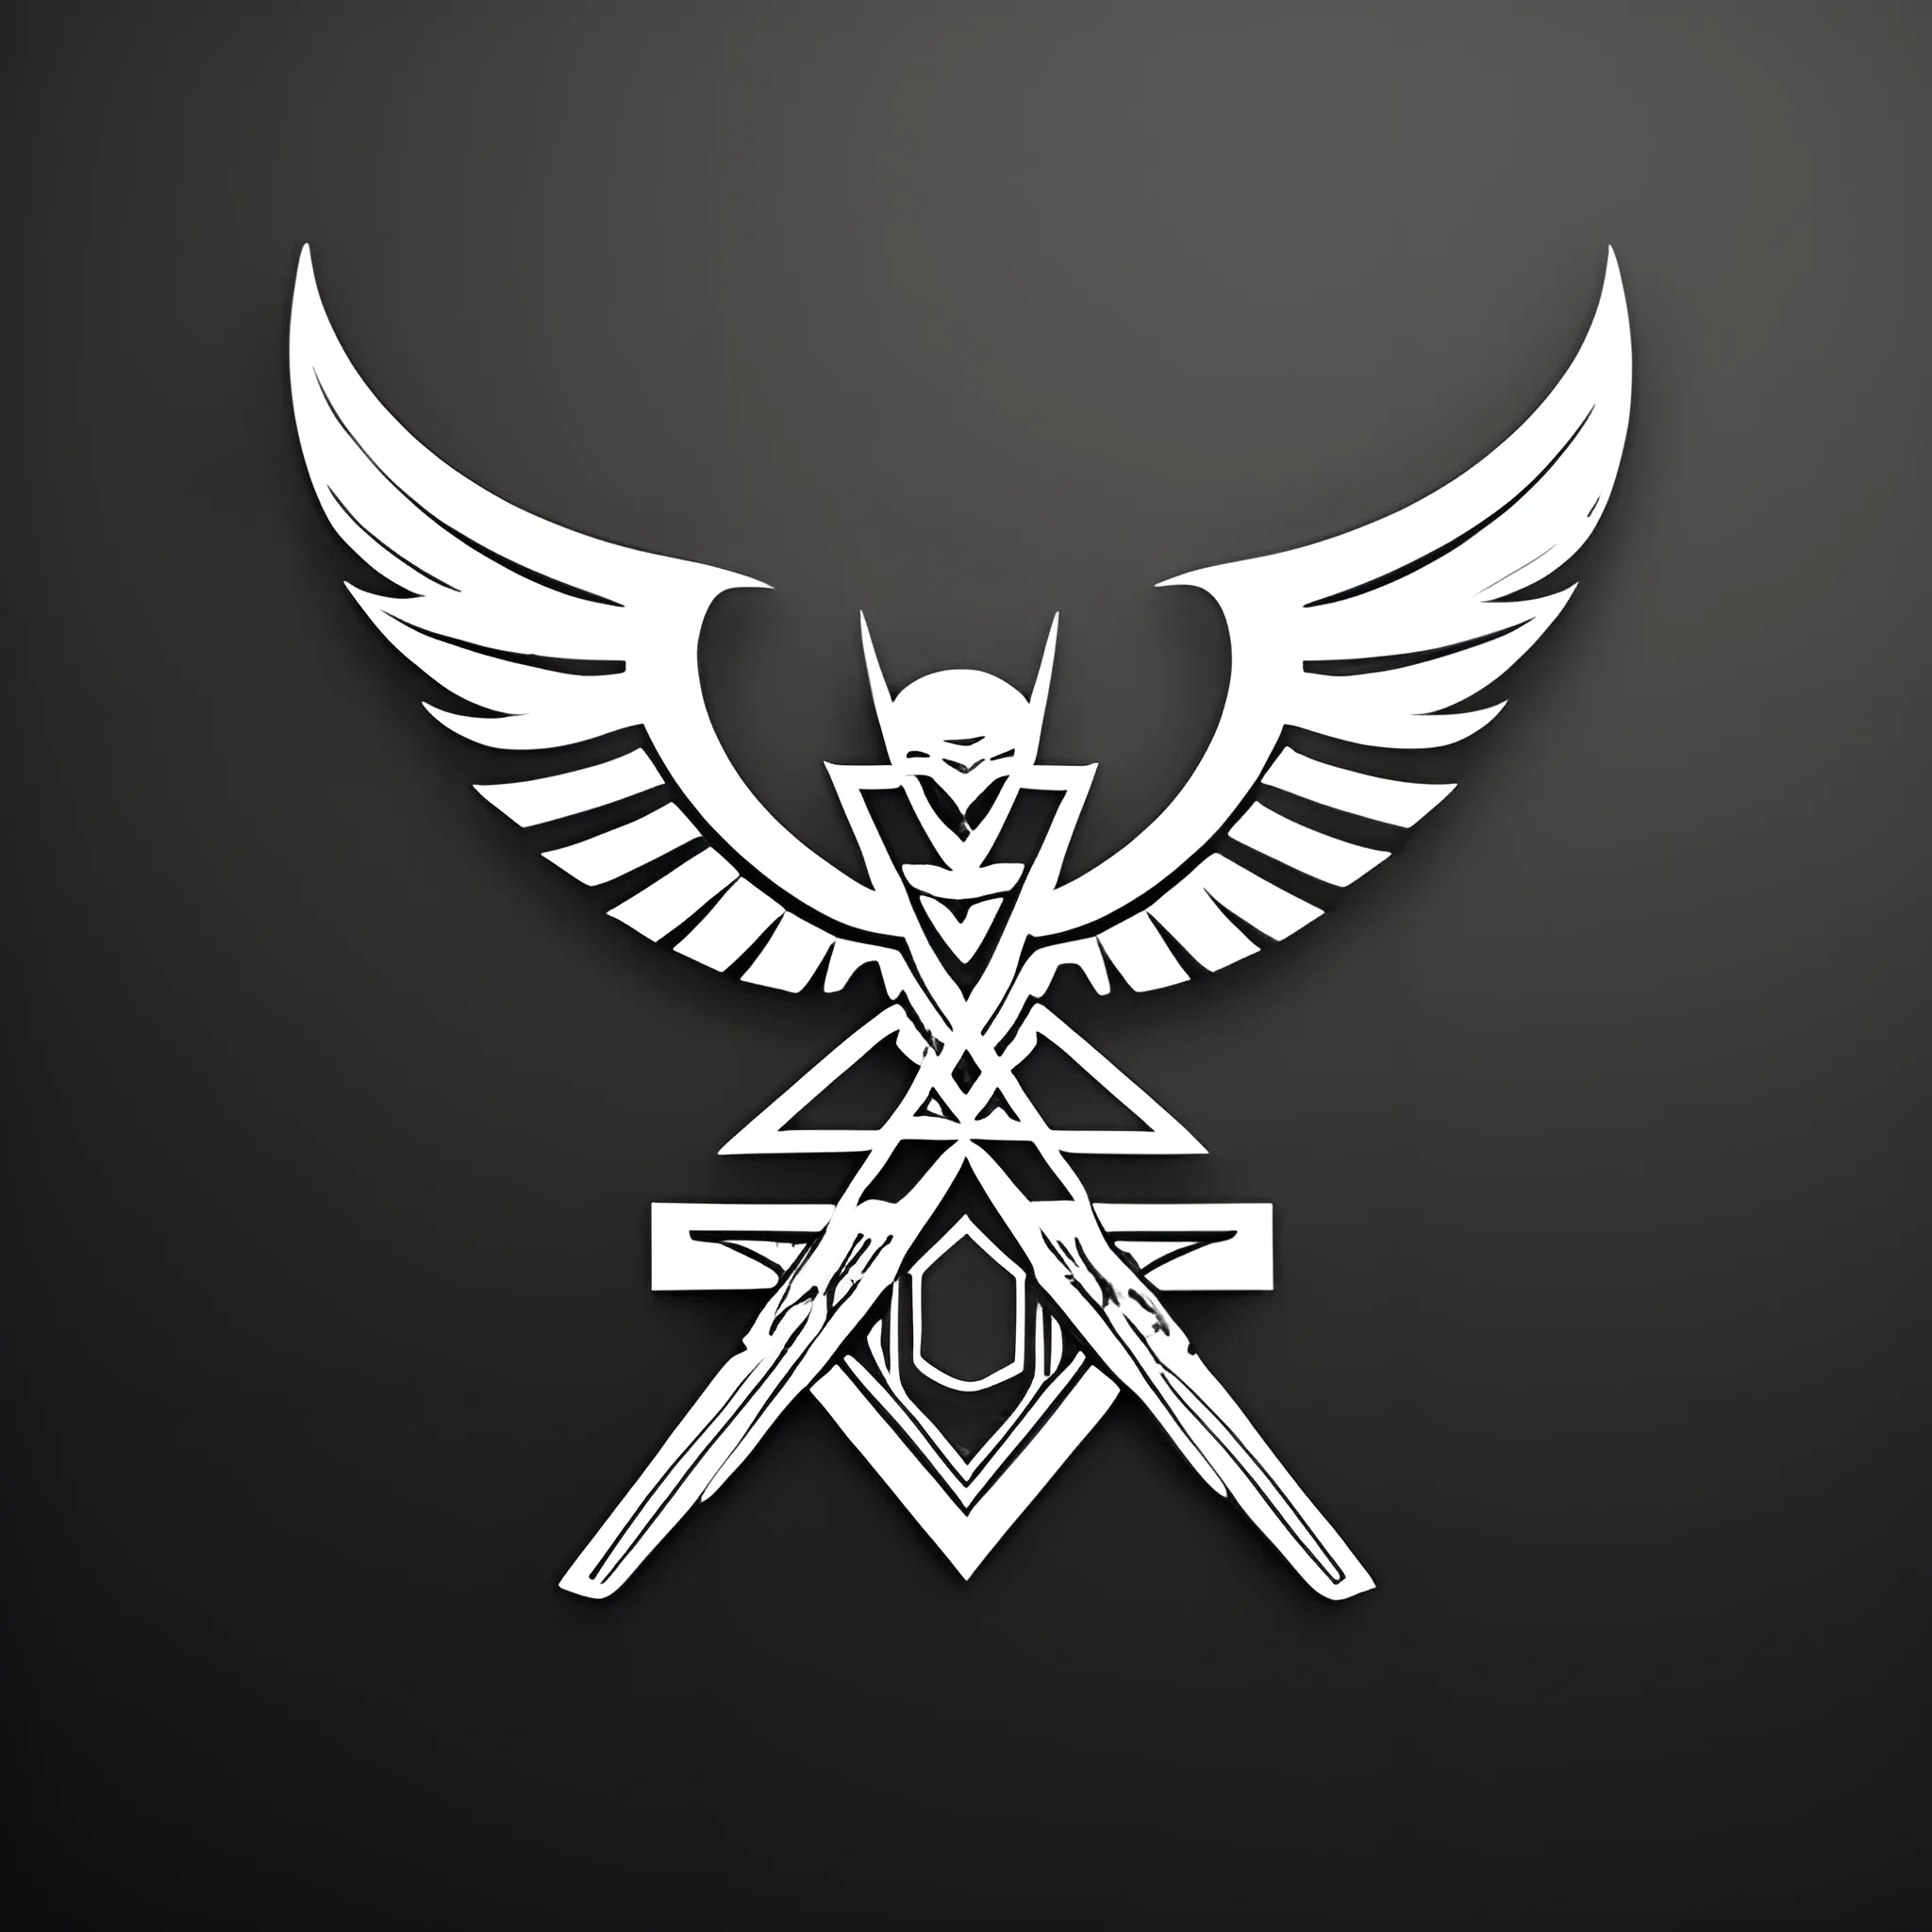 White Valkyrie logo, Black background